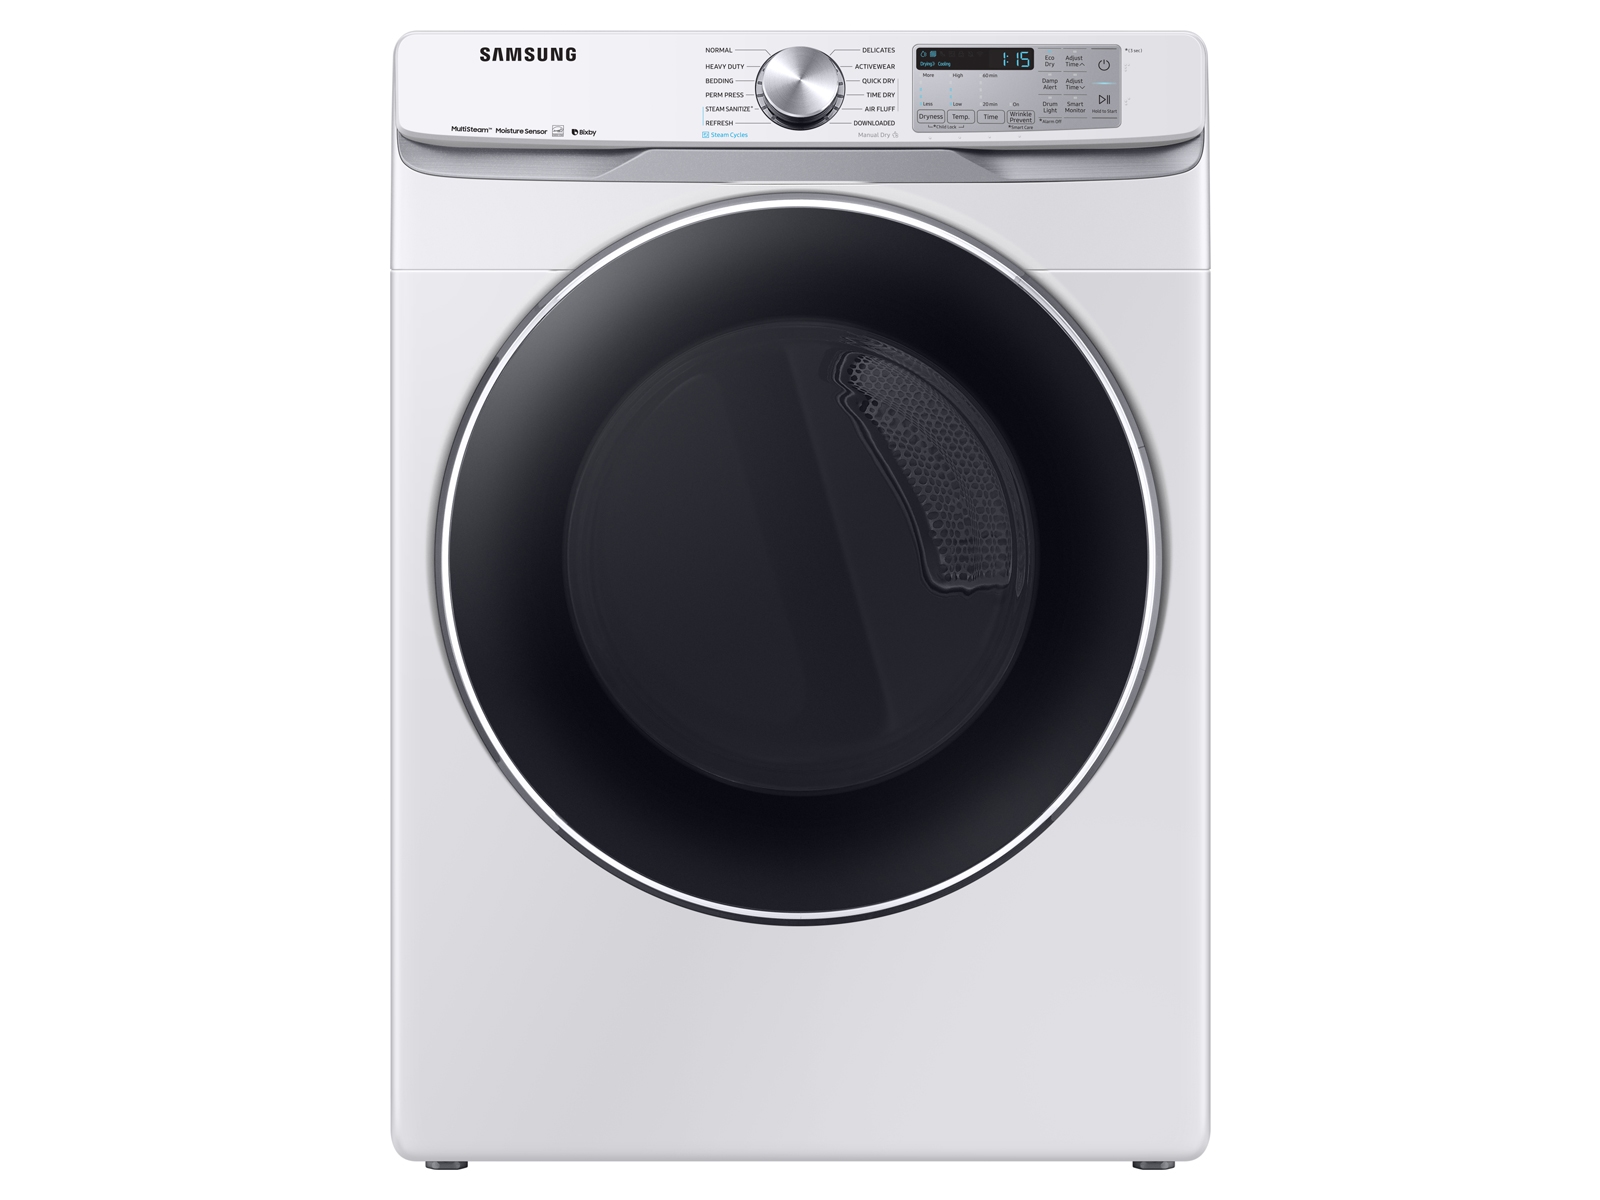 Samsung 7.5 cu. ft. Smart Gas Dryer with Steam Sanitize+ in White(DVG45R6300W/A3)